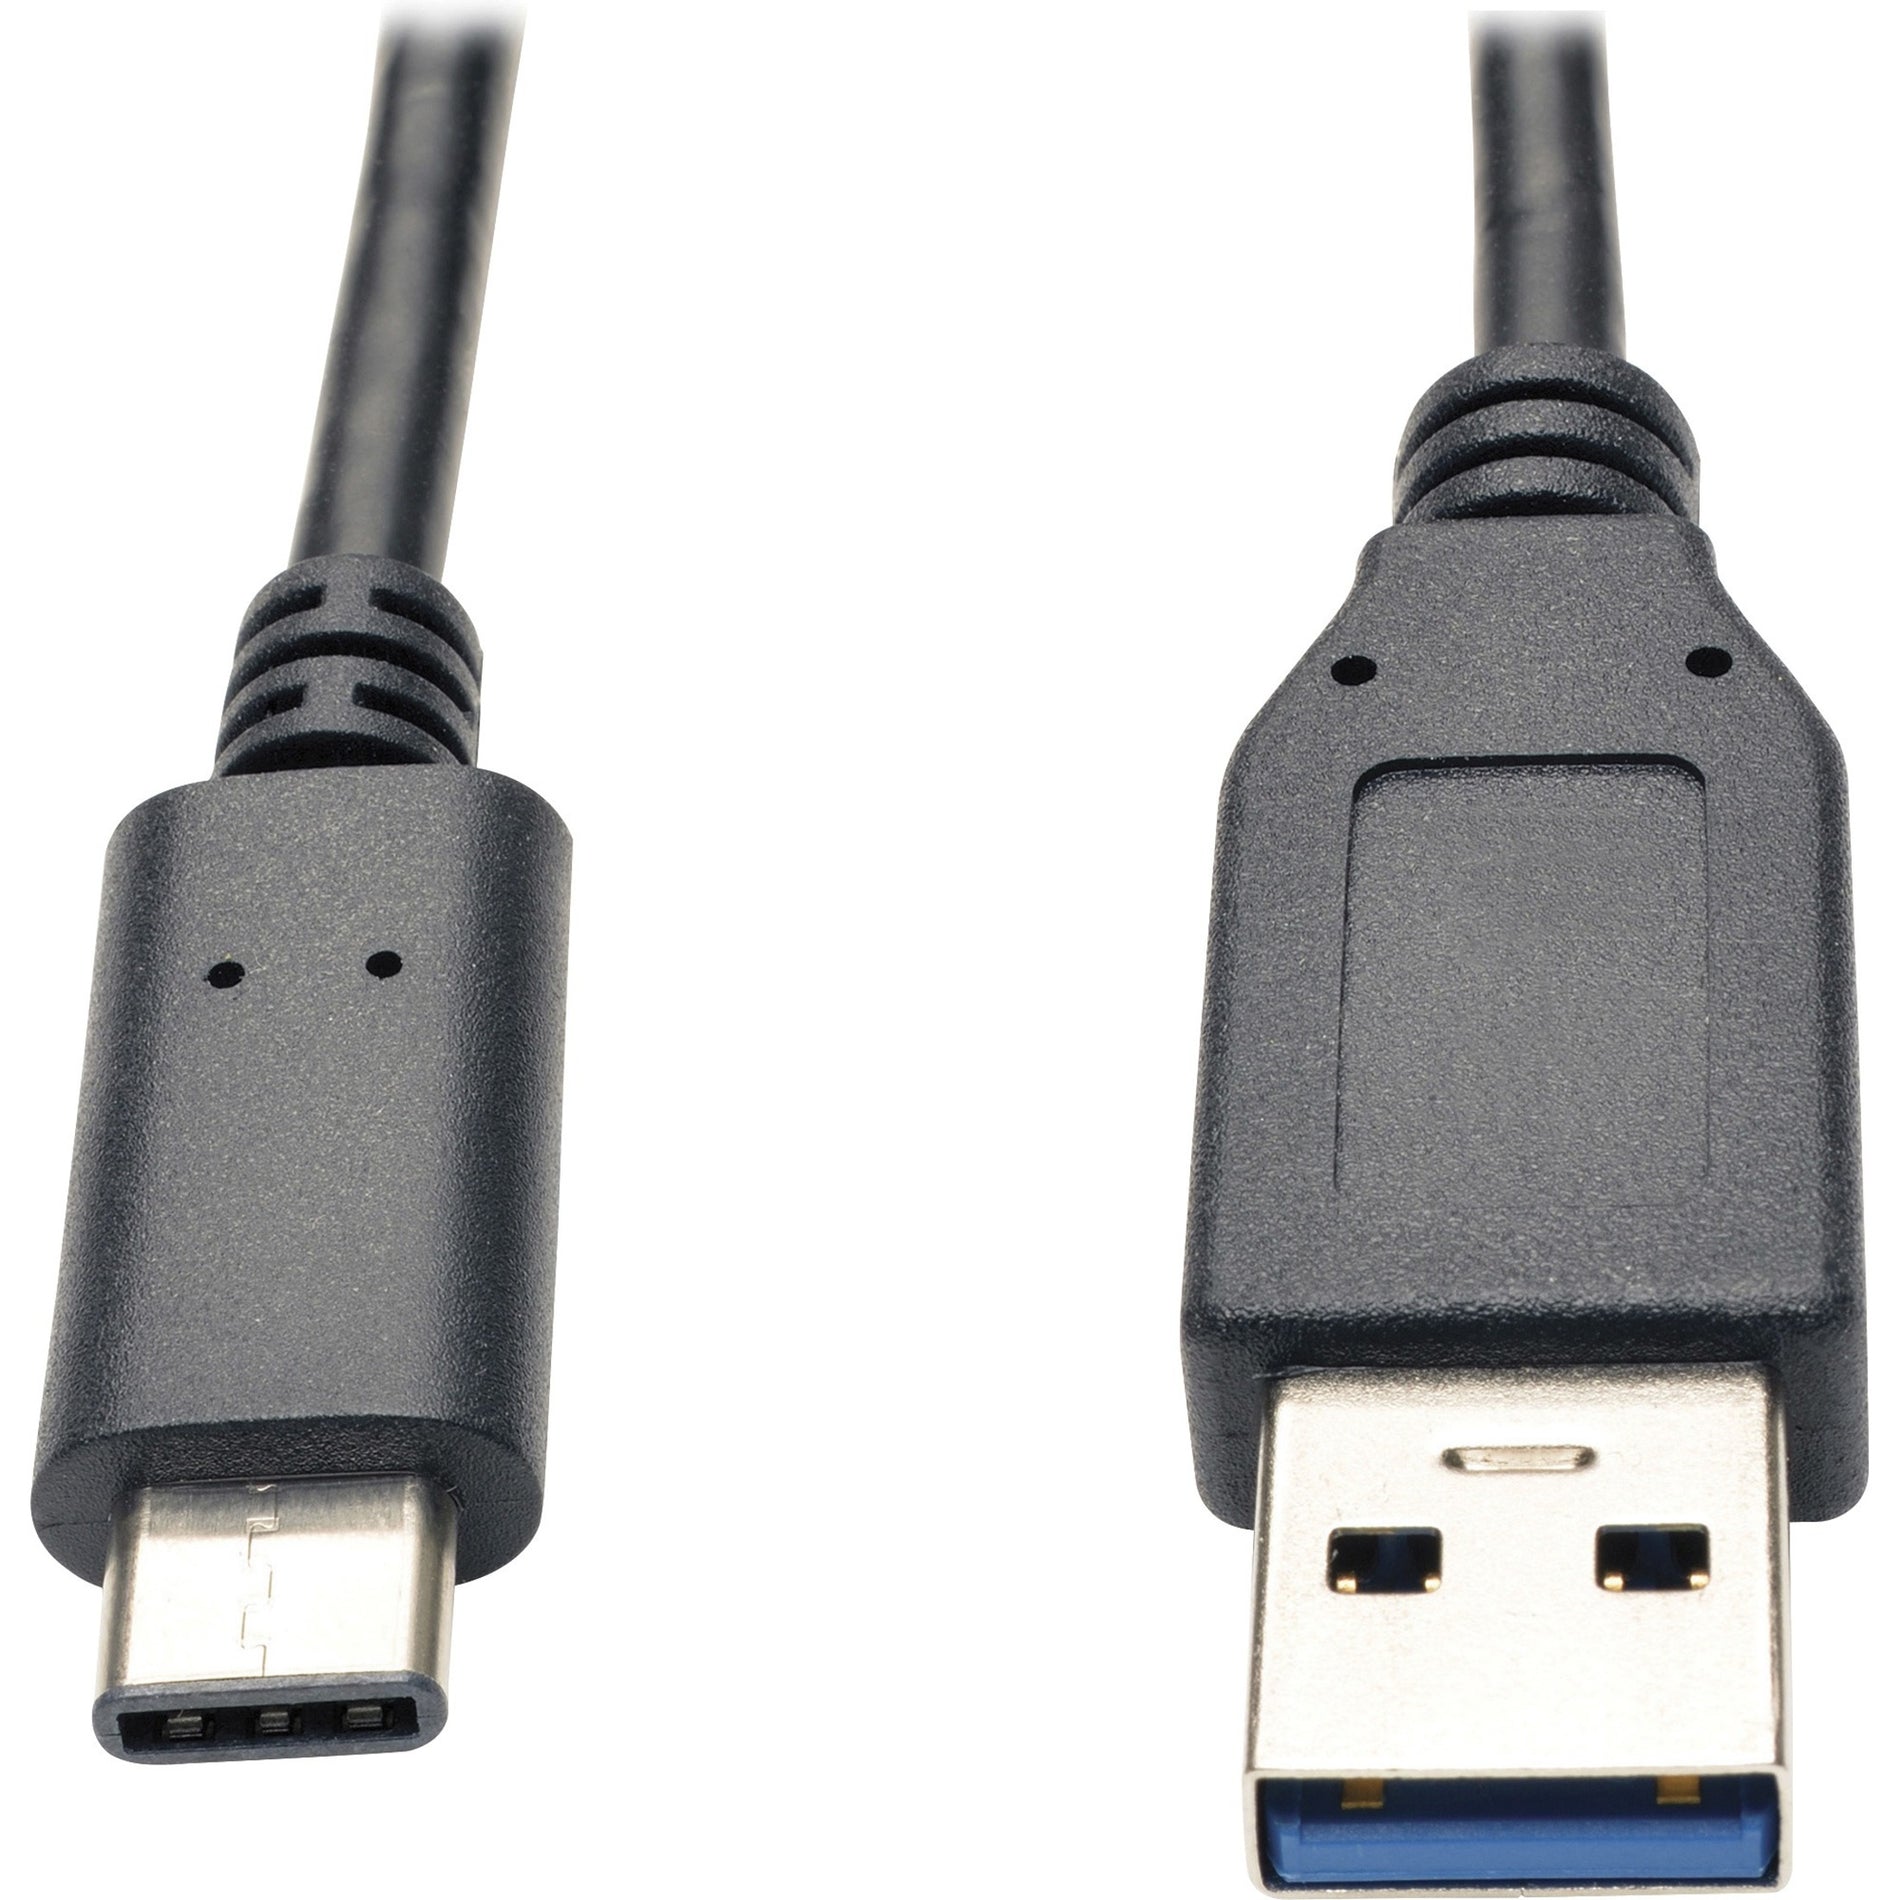 Tripp Lite U428-003 USBデータ転送ケーブル、USB 3.1 Type-CからUSB Type-A M/M 3-FT。Tripp Lite – トリップライト